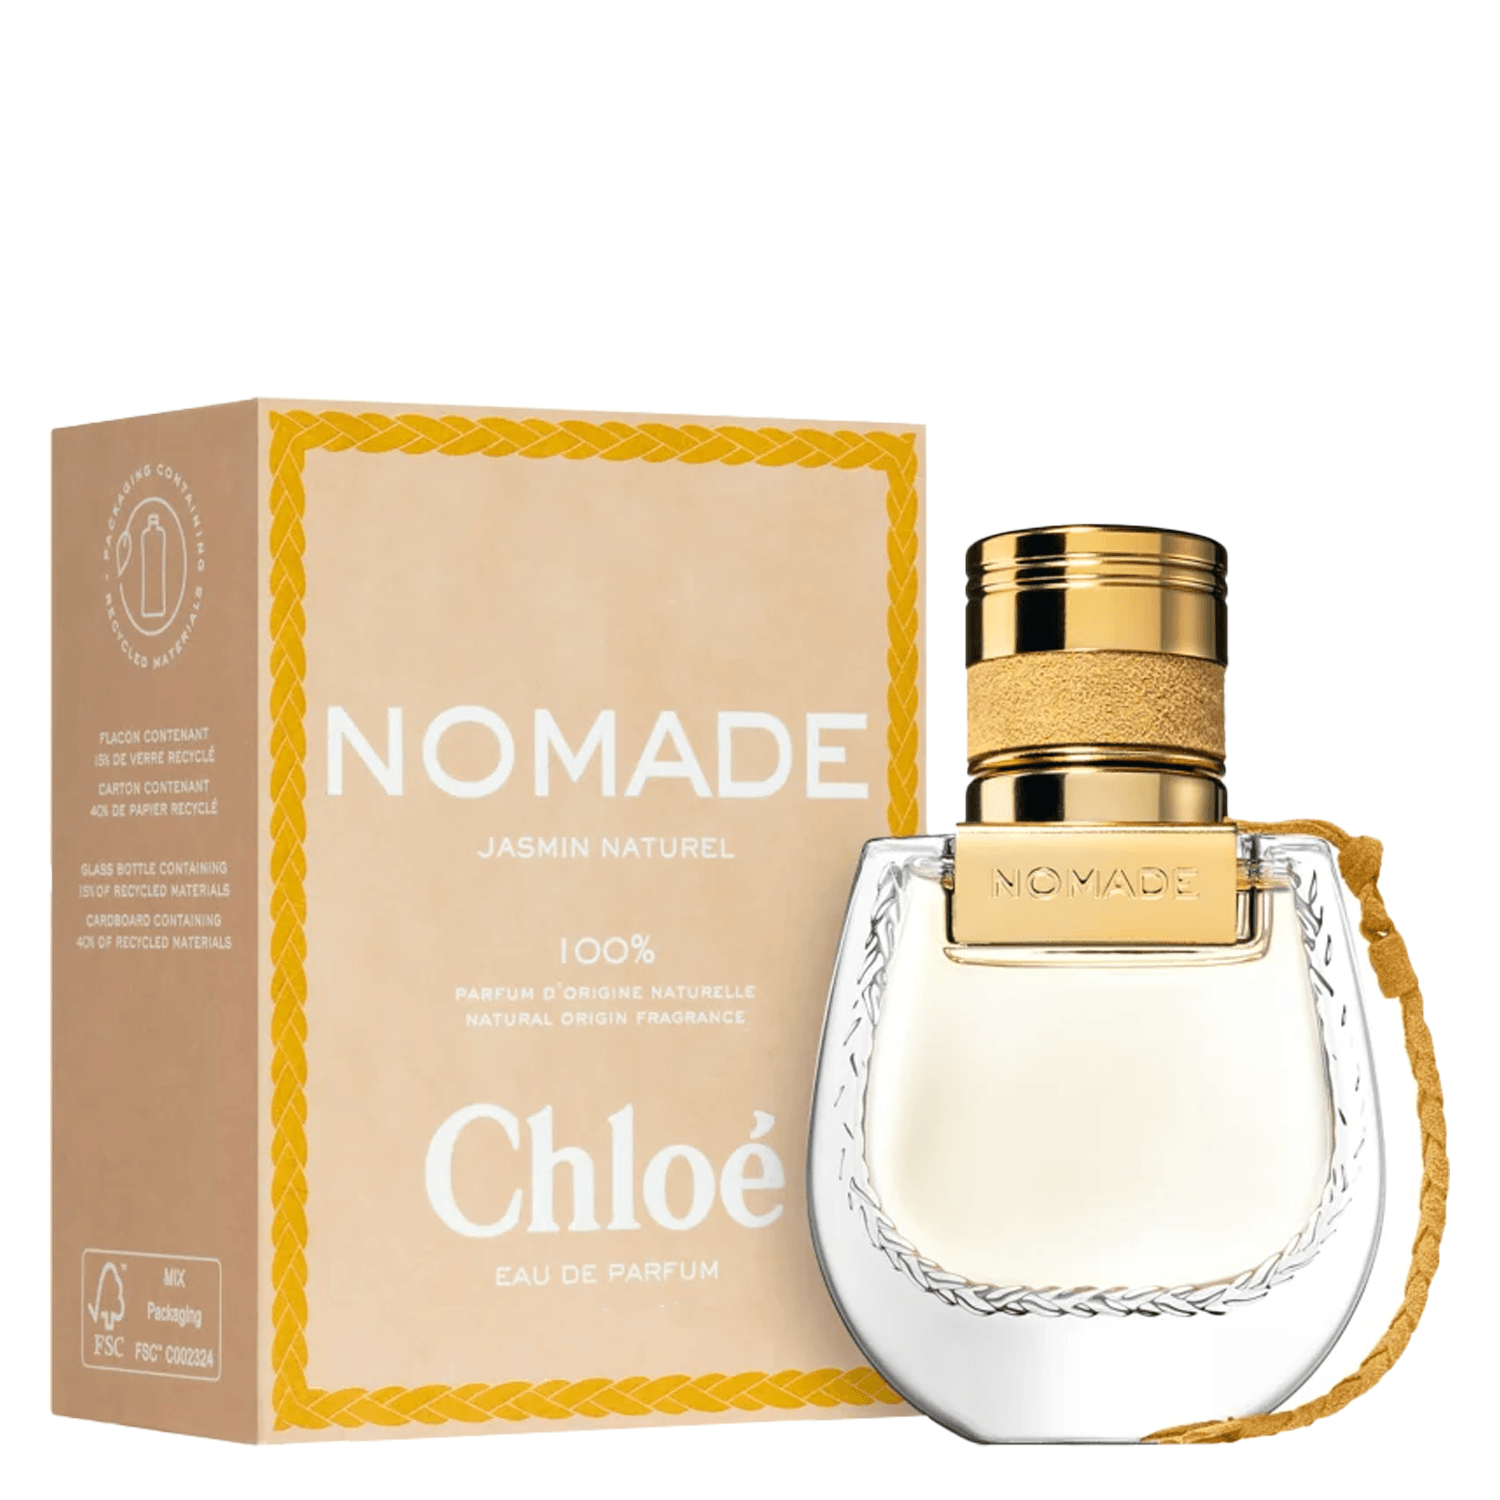 Product image from Chloé Nomade - Jasmin Naturel Eau de Parfum